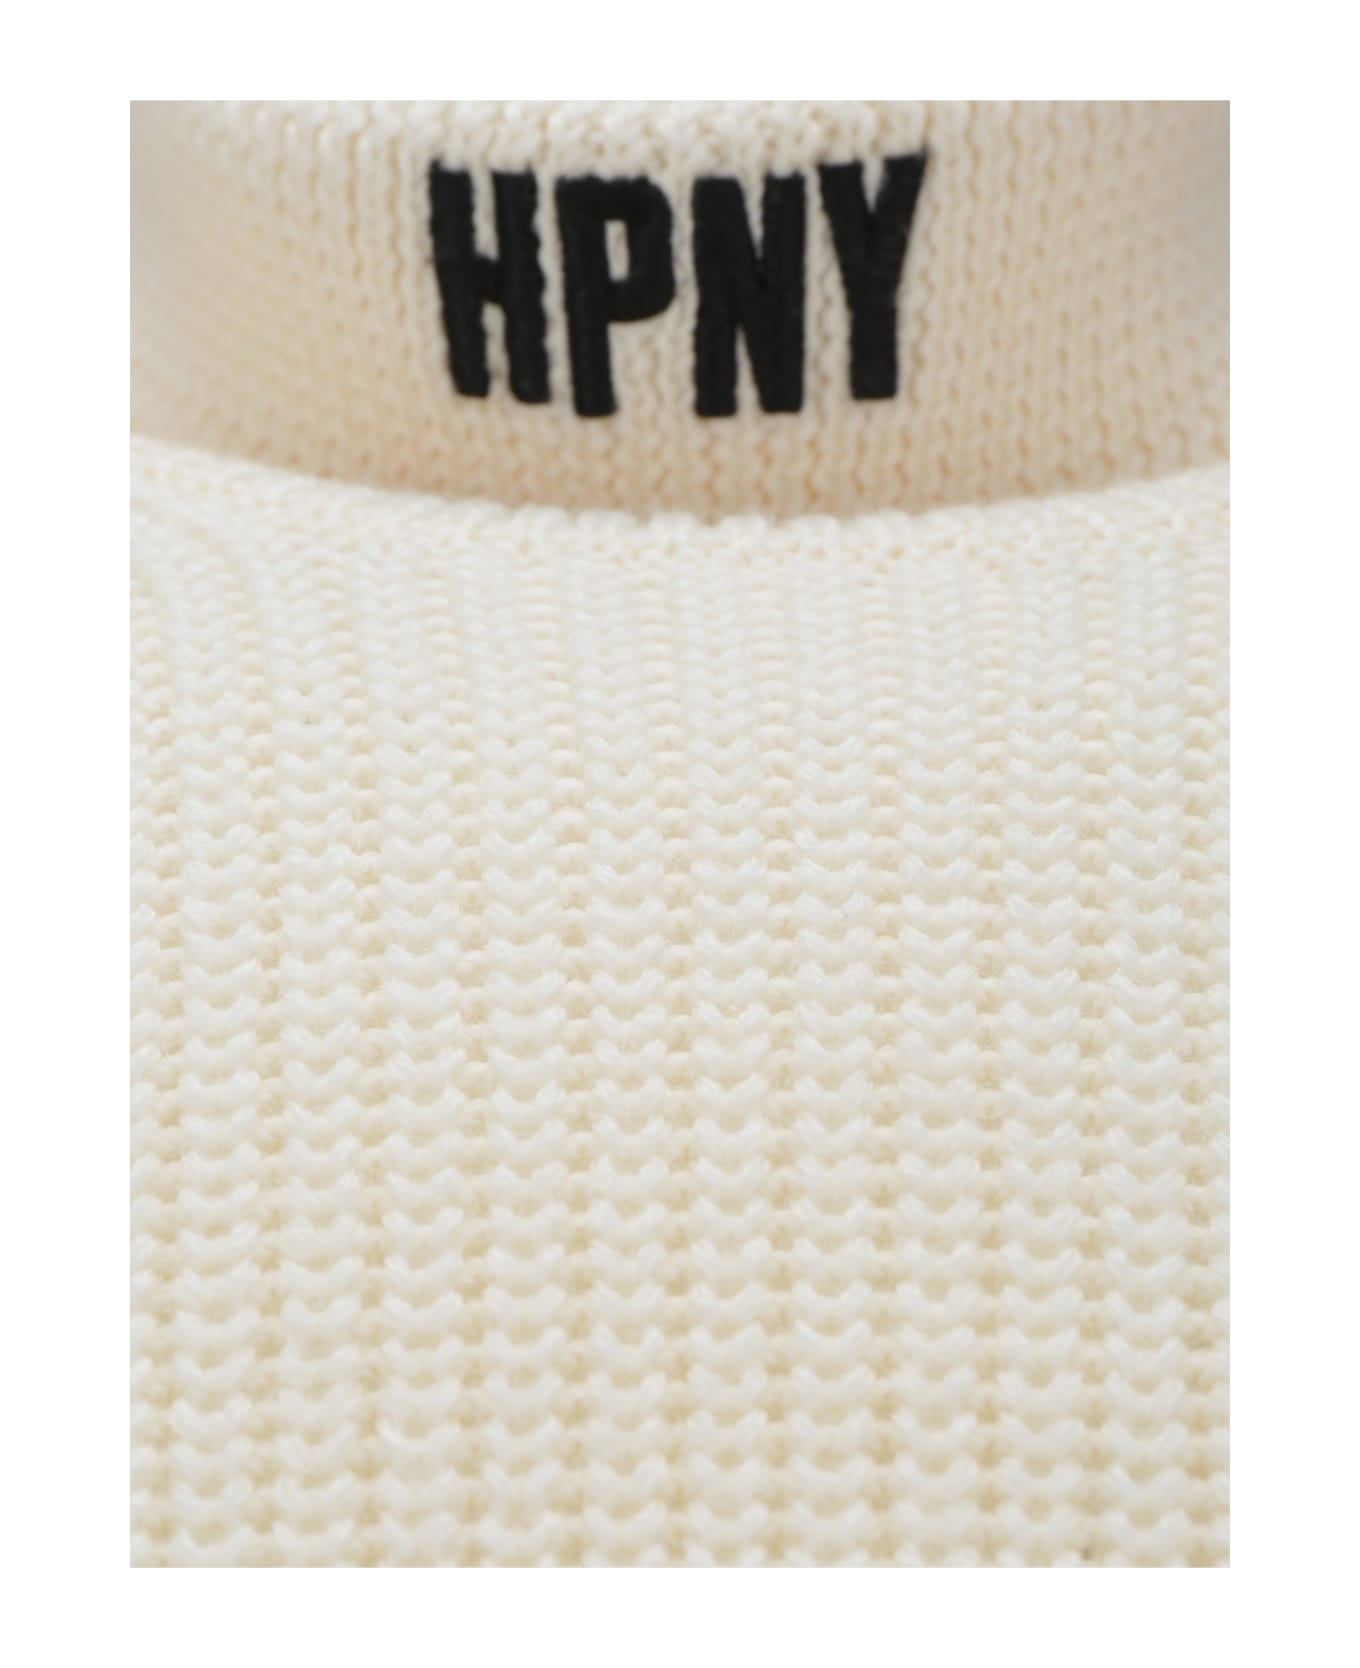 HERON PRESTON Sweater - Ivory Blac